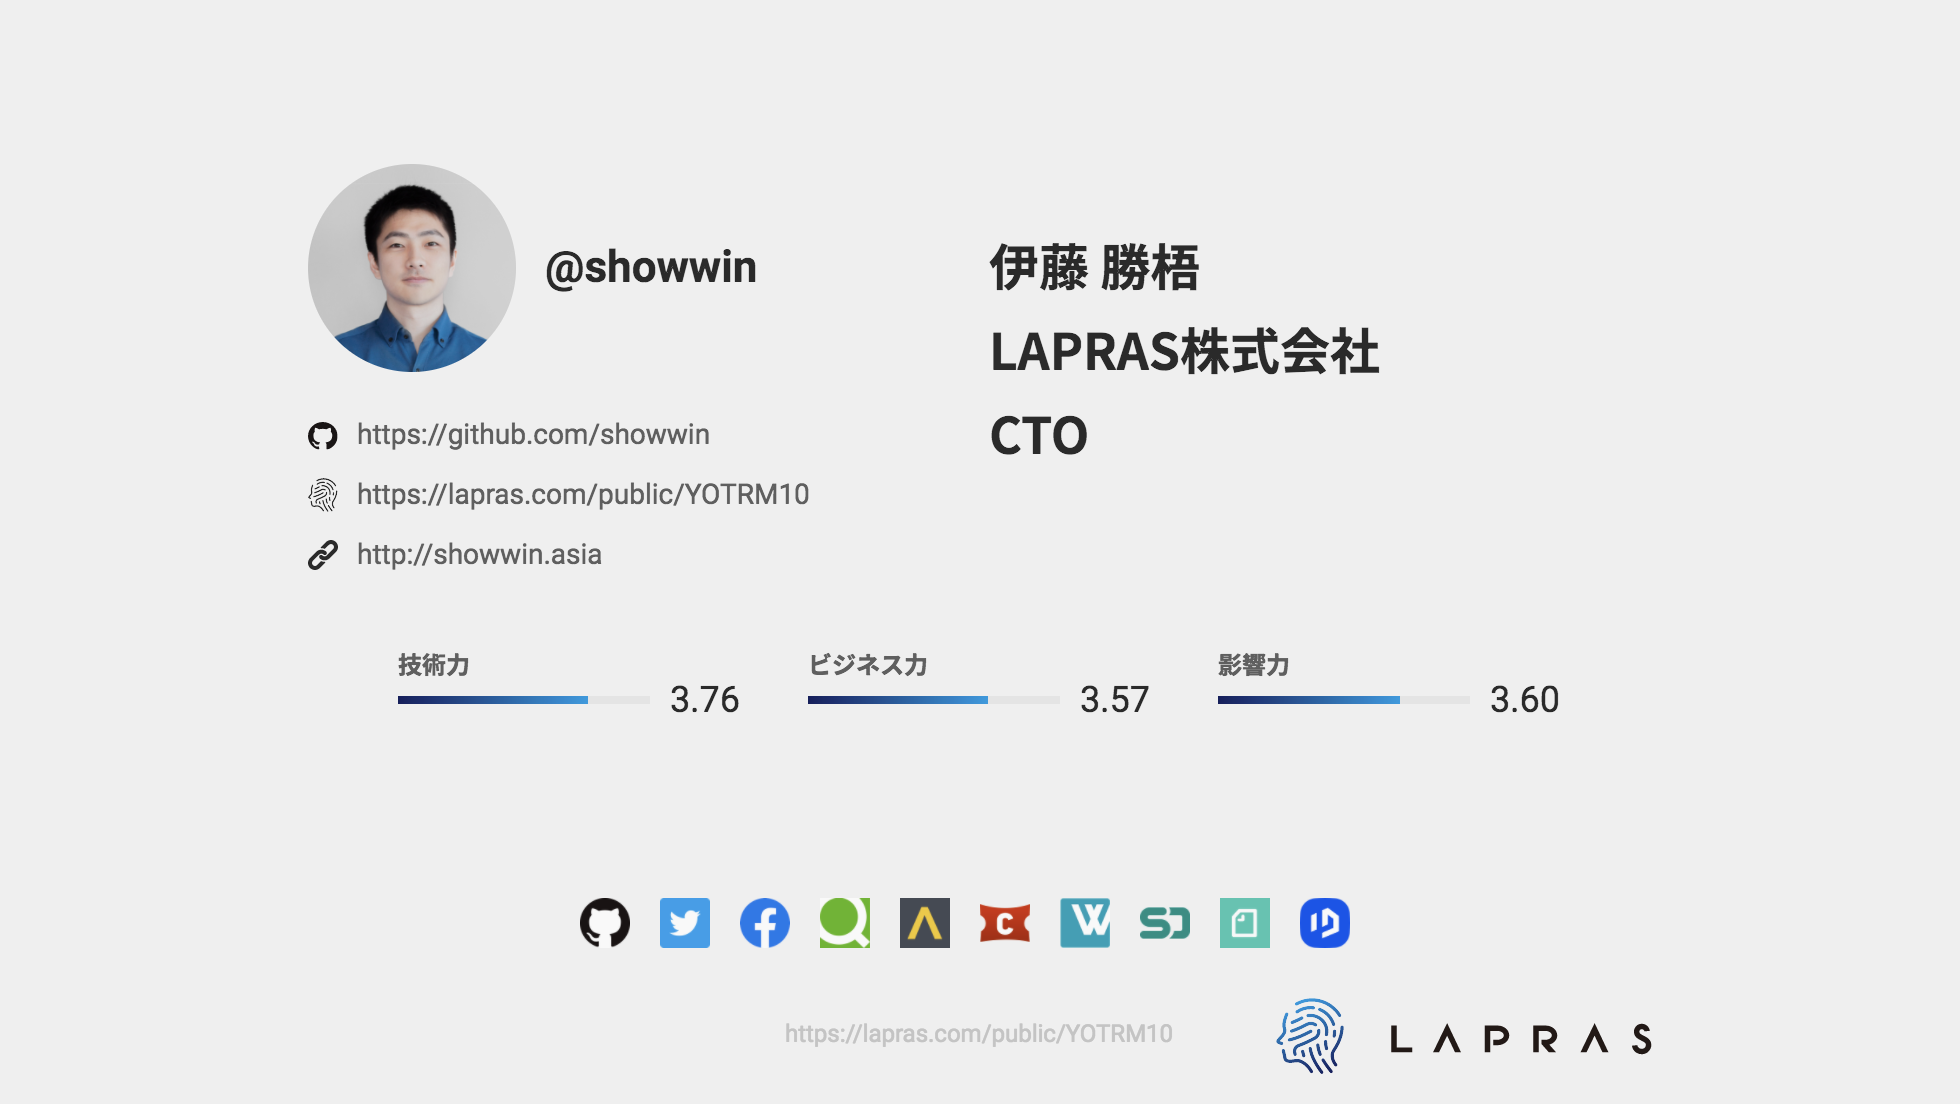 Laprasポートフォリオがワンクリックで自己紹介スライドに プレゼンテーション機能のb版をリリース News Lapras株式会社 すべての人に最善の選択肢をマッチングする